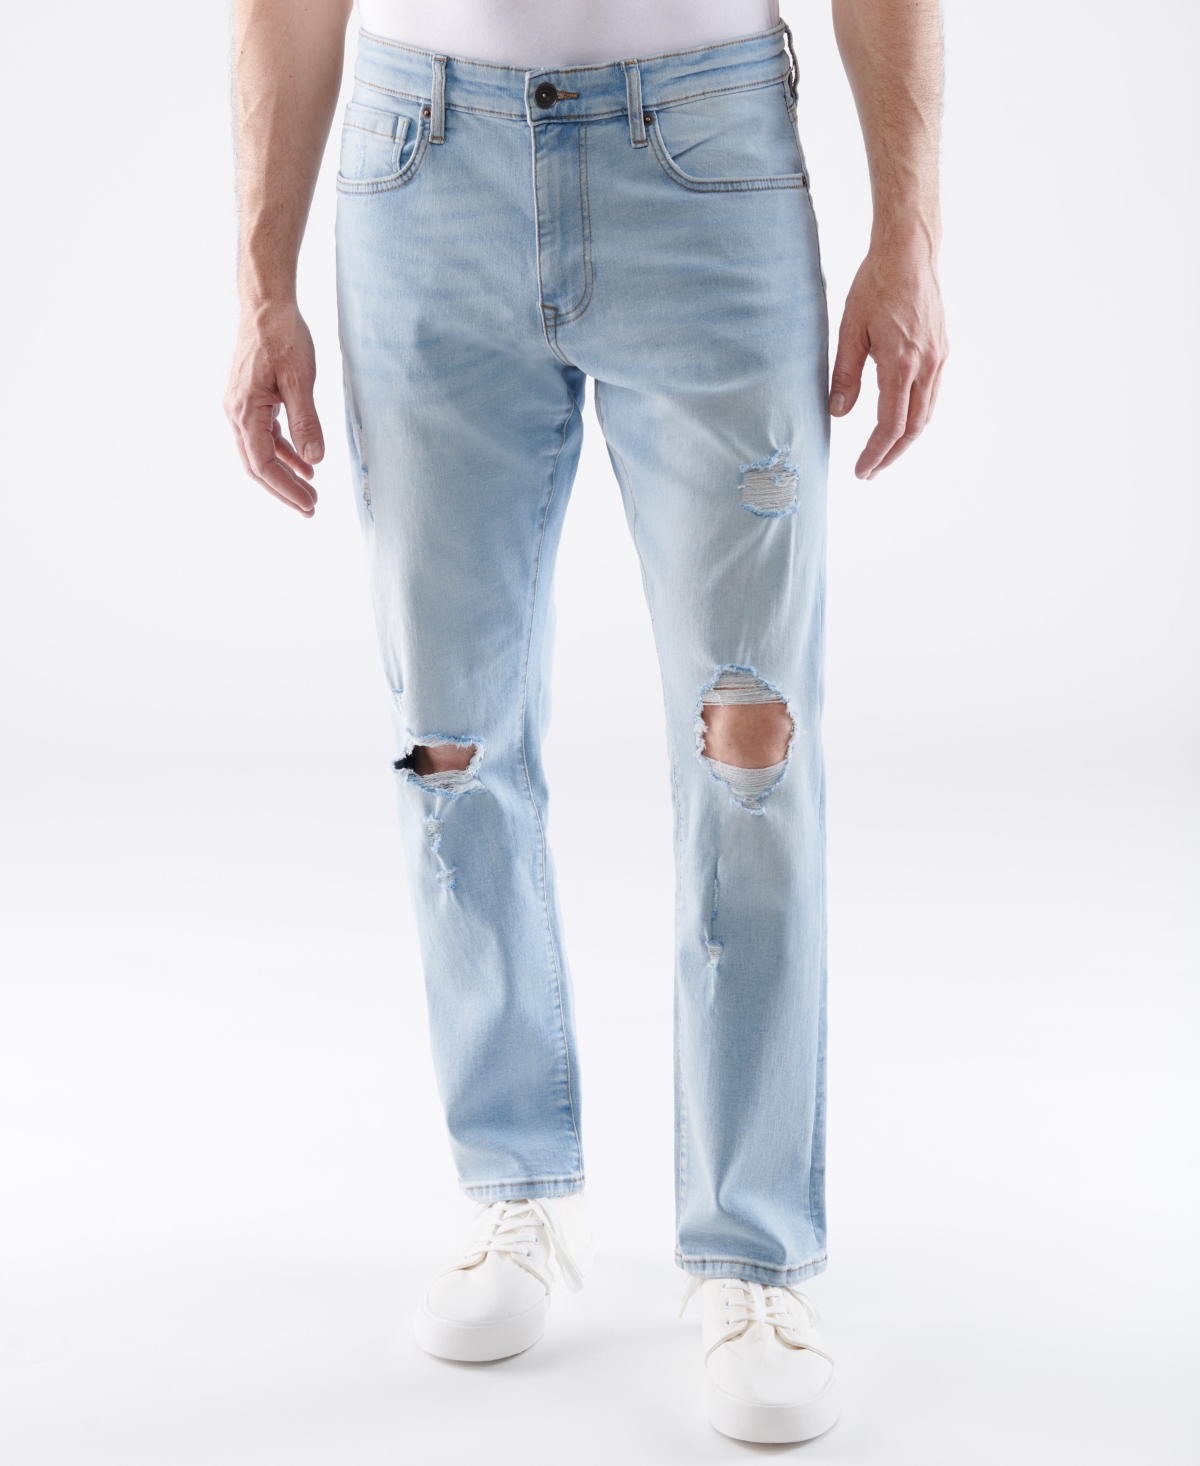 Men's Slim-Fit Stretch Jean - Medium Blue